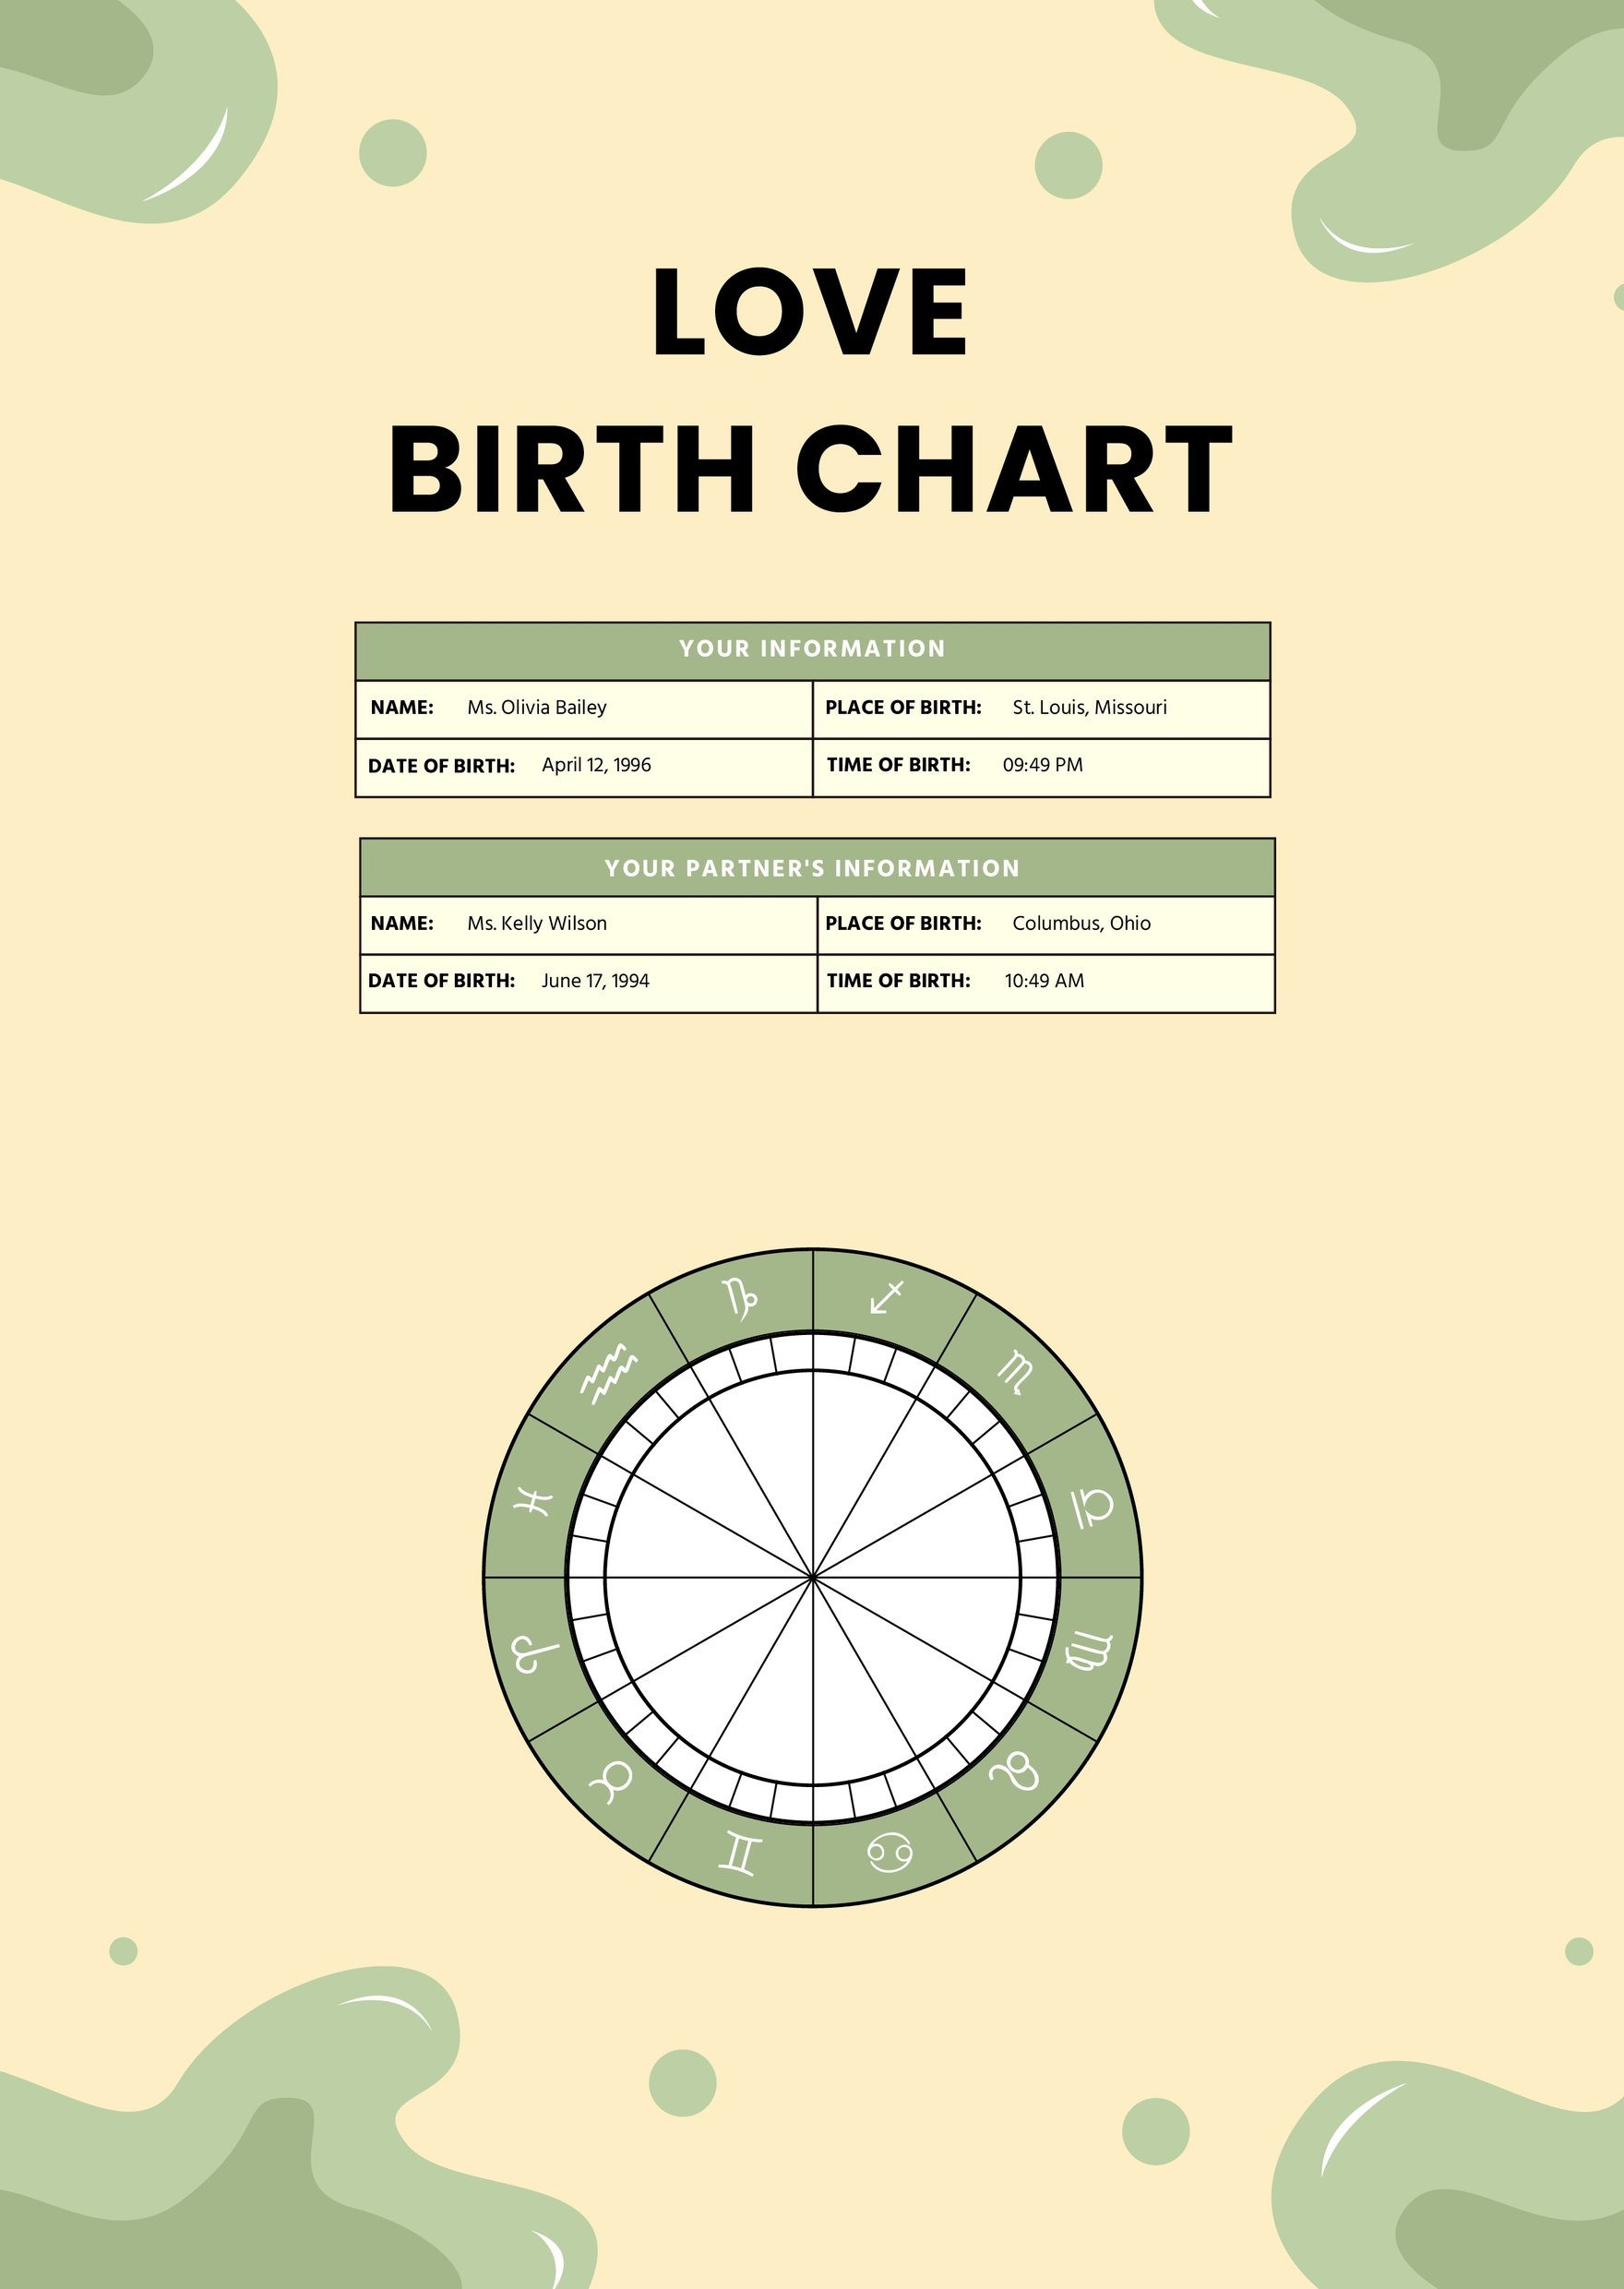 Love Birth Chart Template